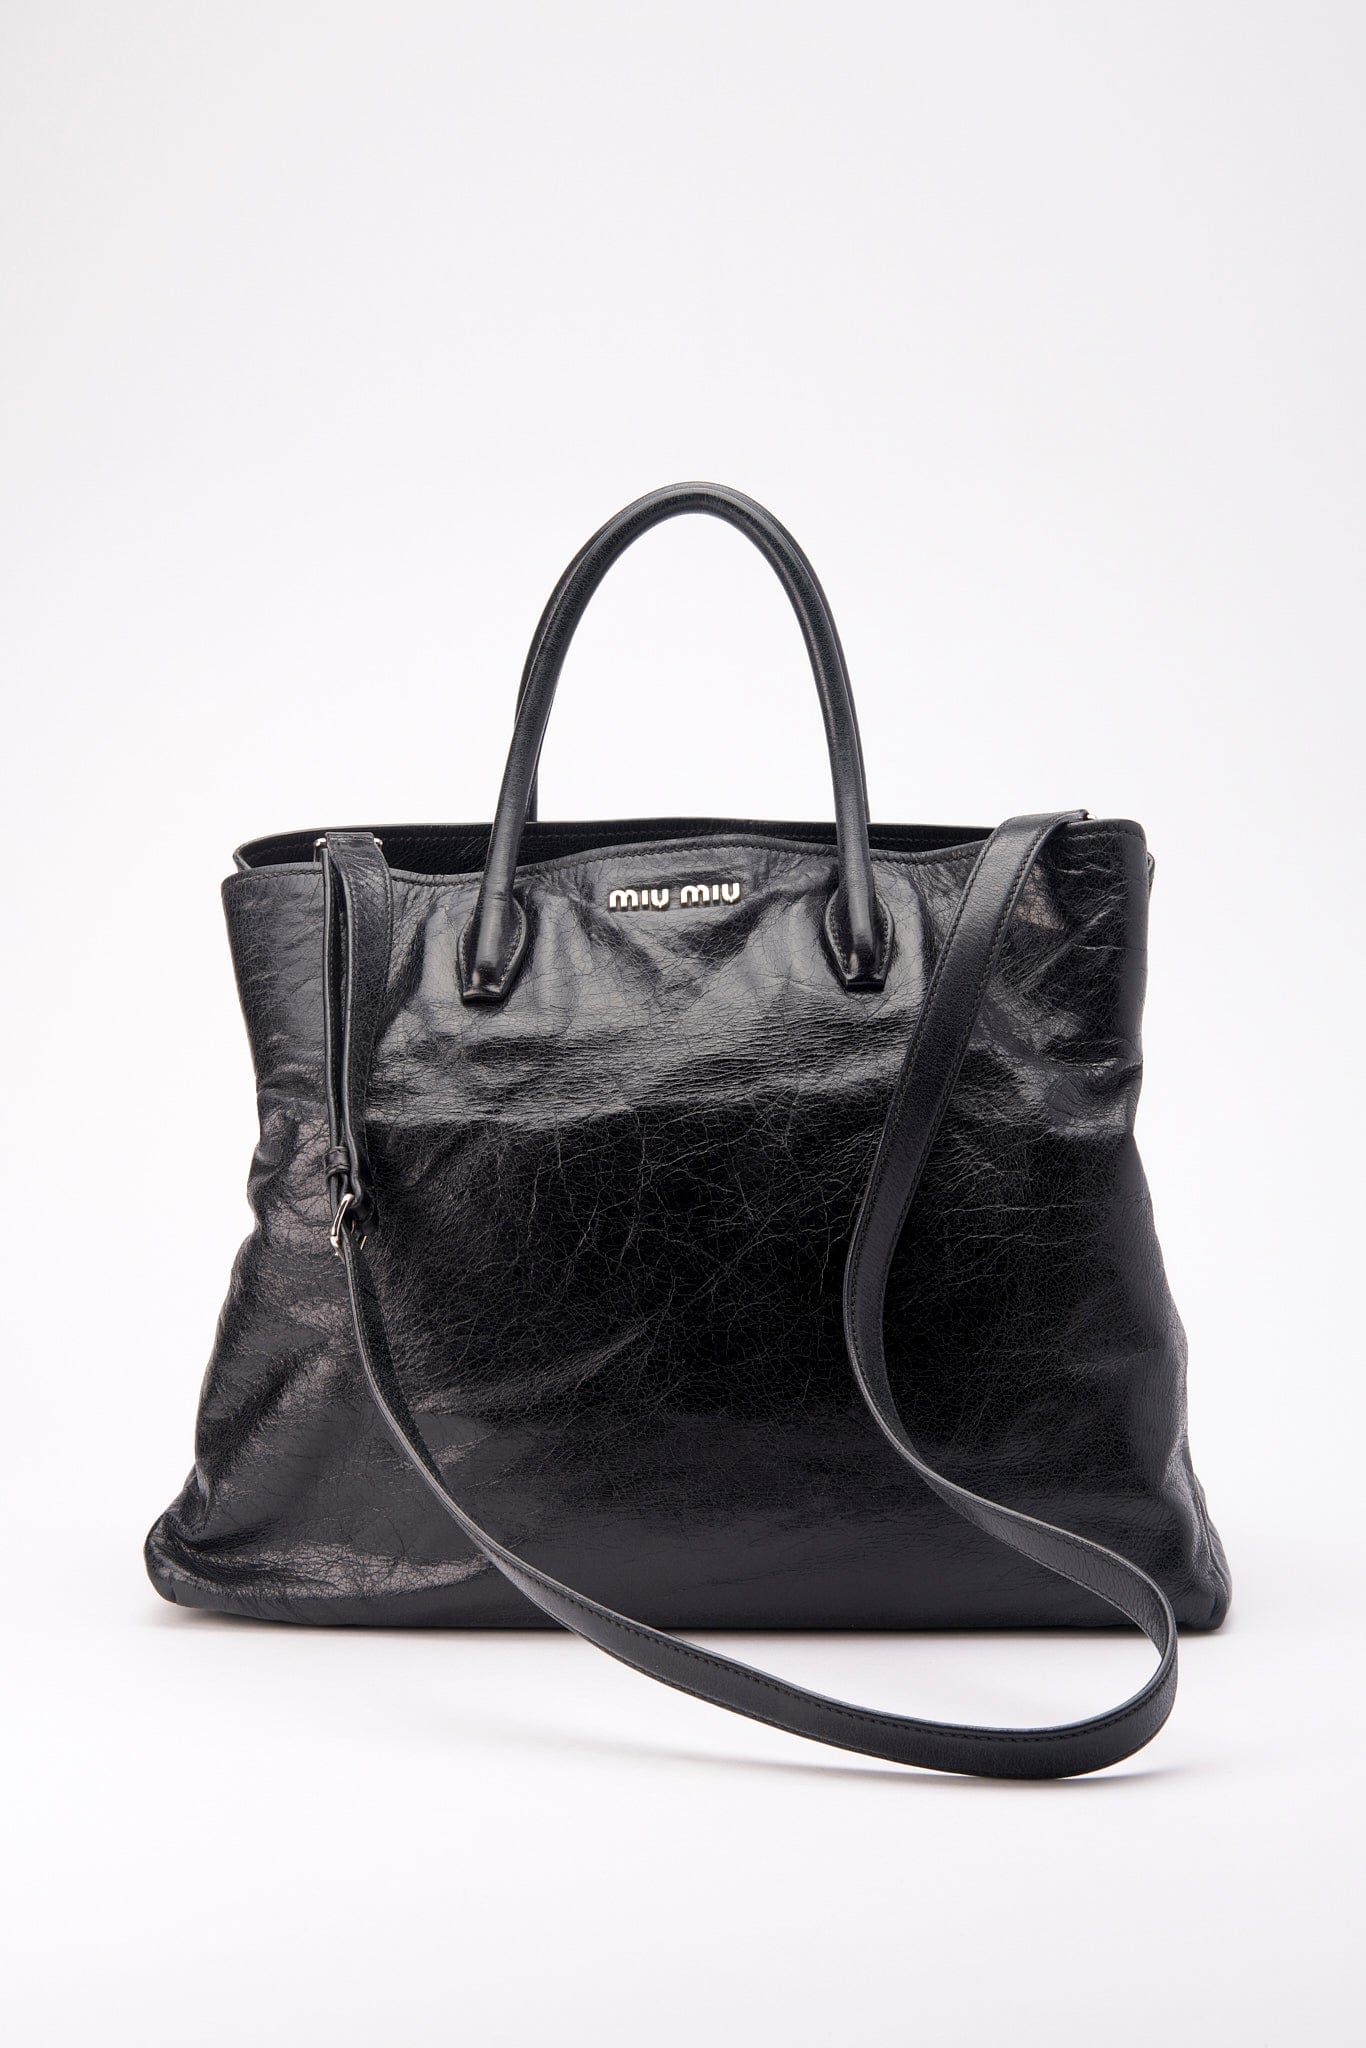 Miu Miu Black Leather Tote Bag